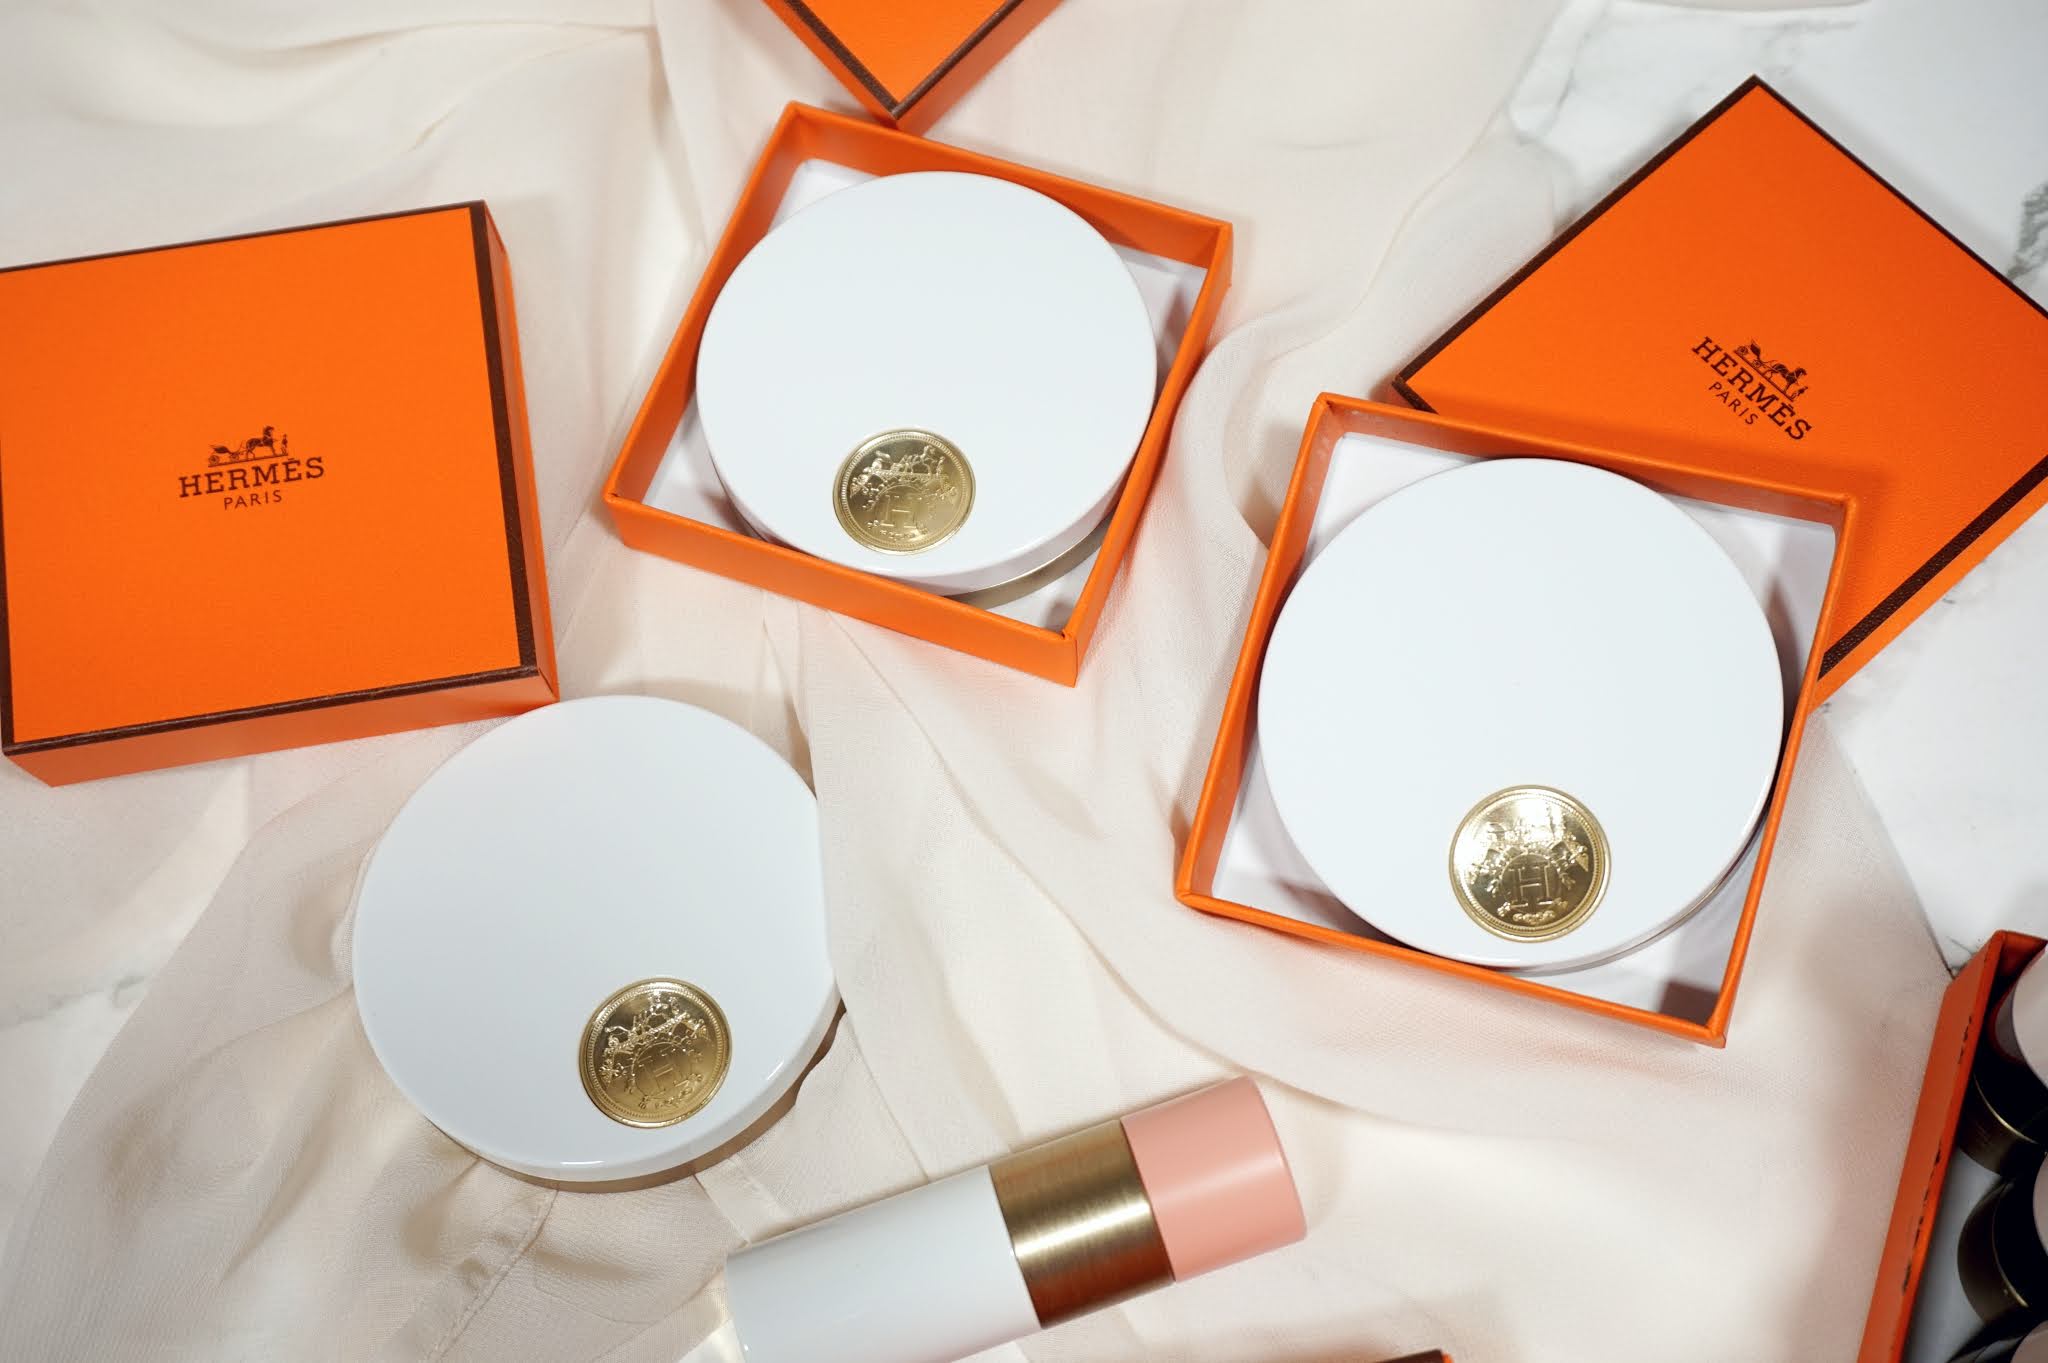 Hermès Rose Hermès - Silky Blush Powder Review and Swatches